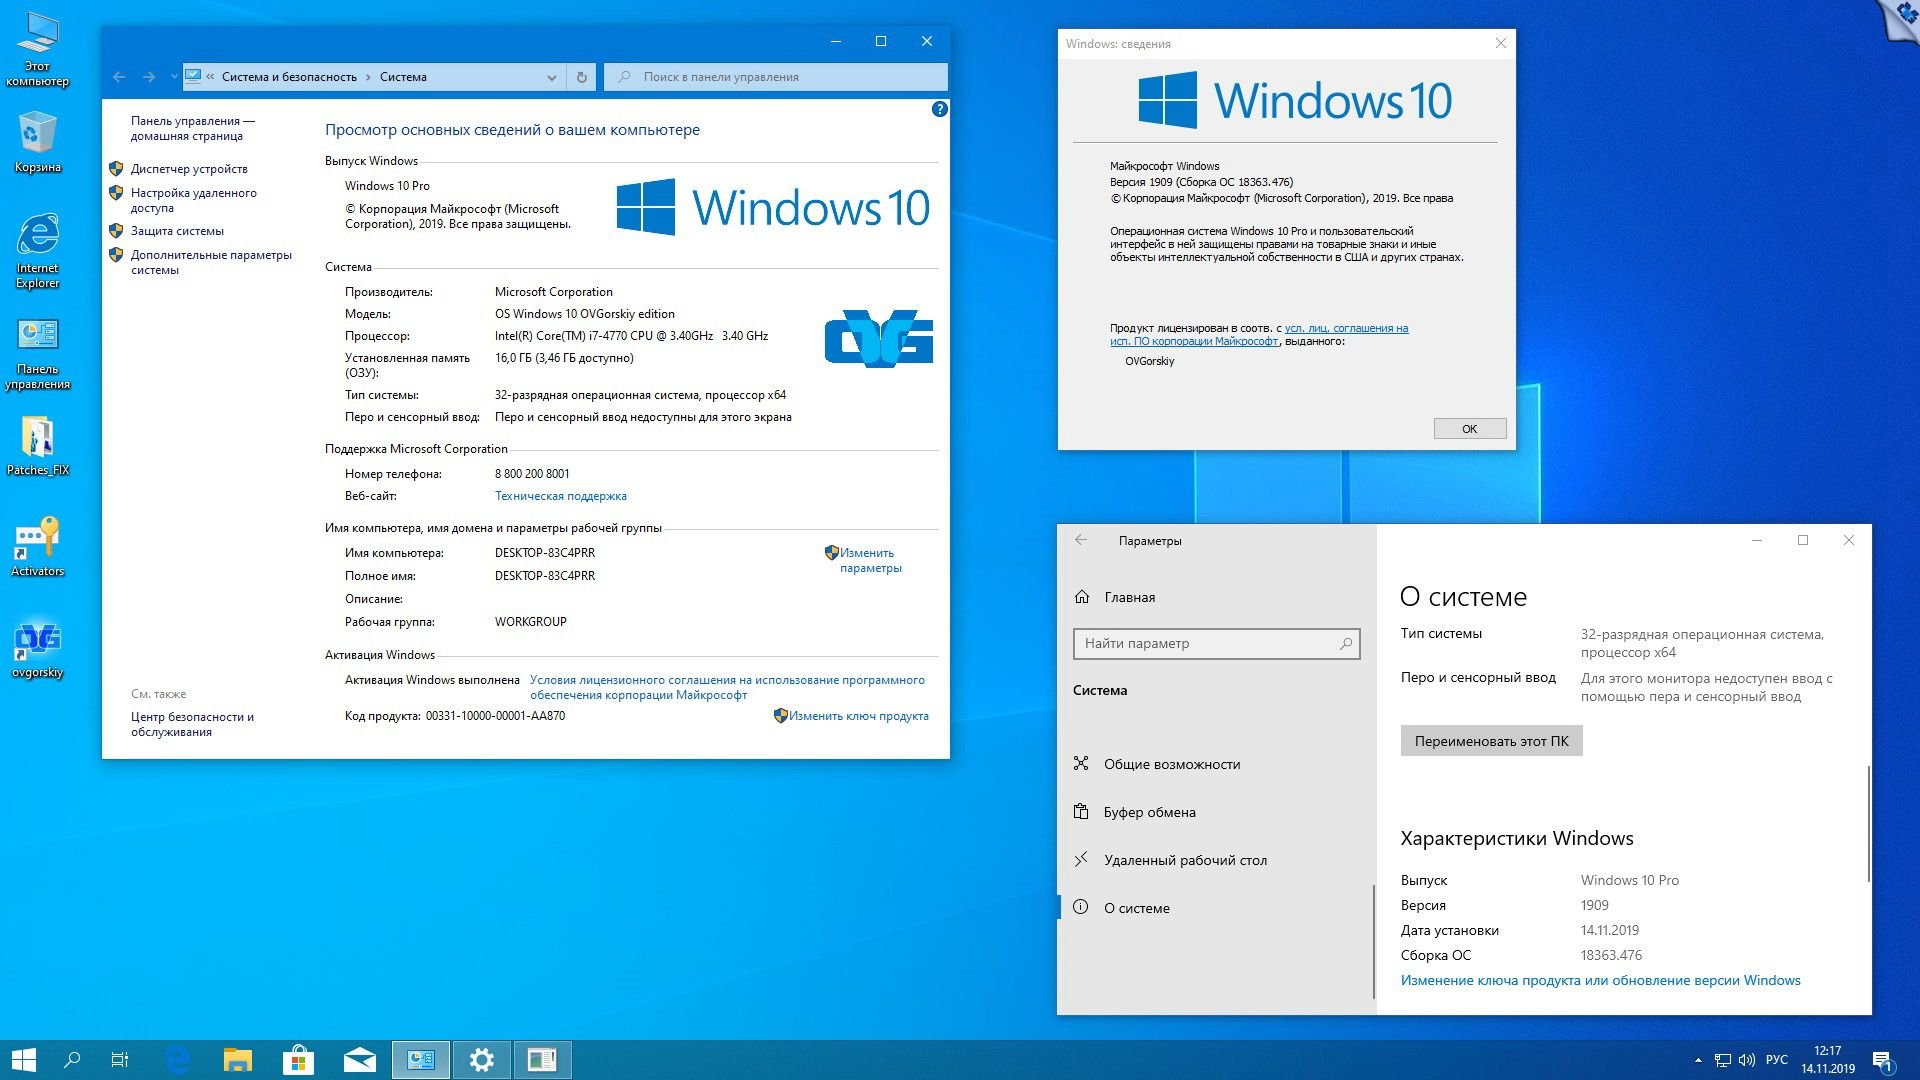 Производитель windows 10. Виндовс 10. О системе Windows 10. Операционная система Windows 10 Pro x64. Windows 10 Pro система.